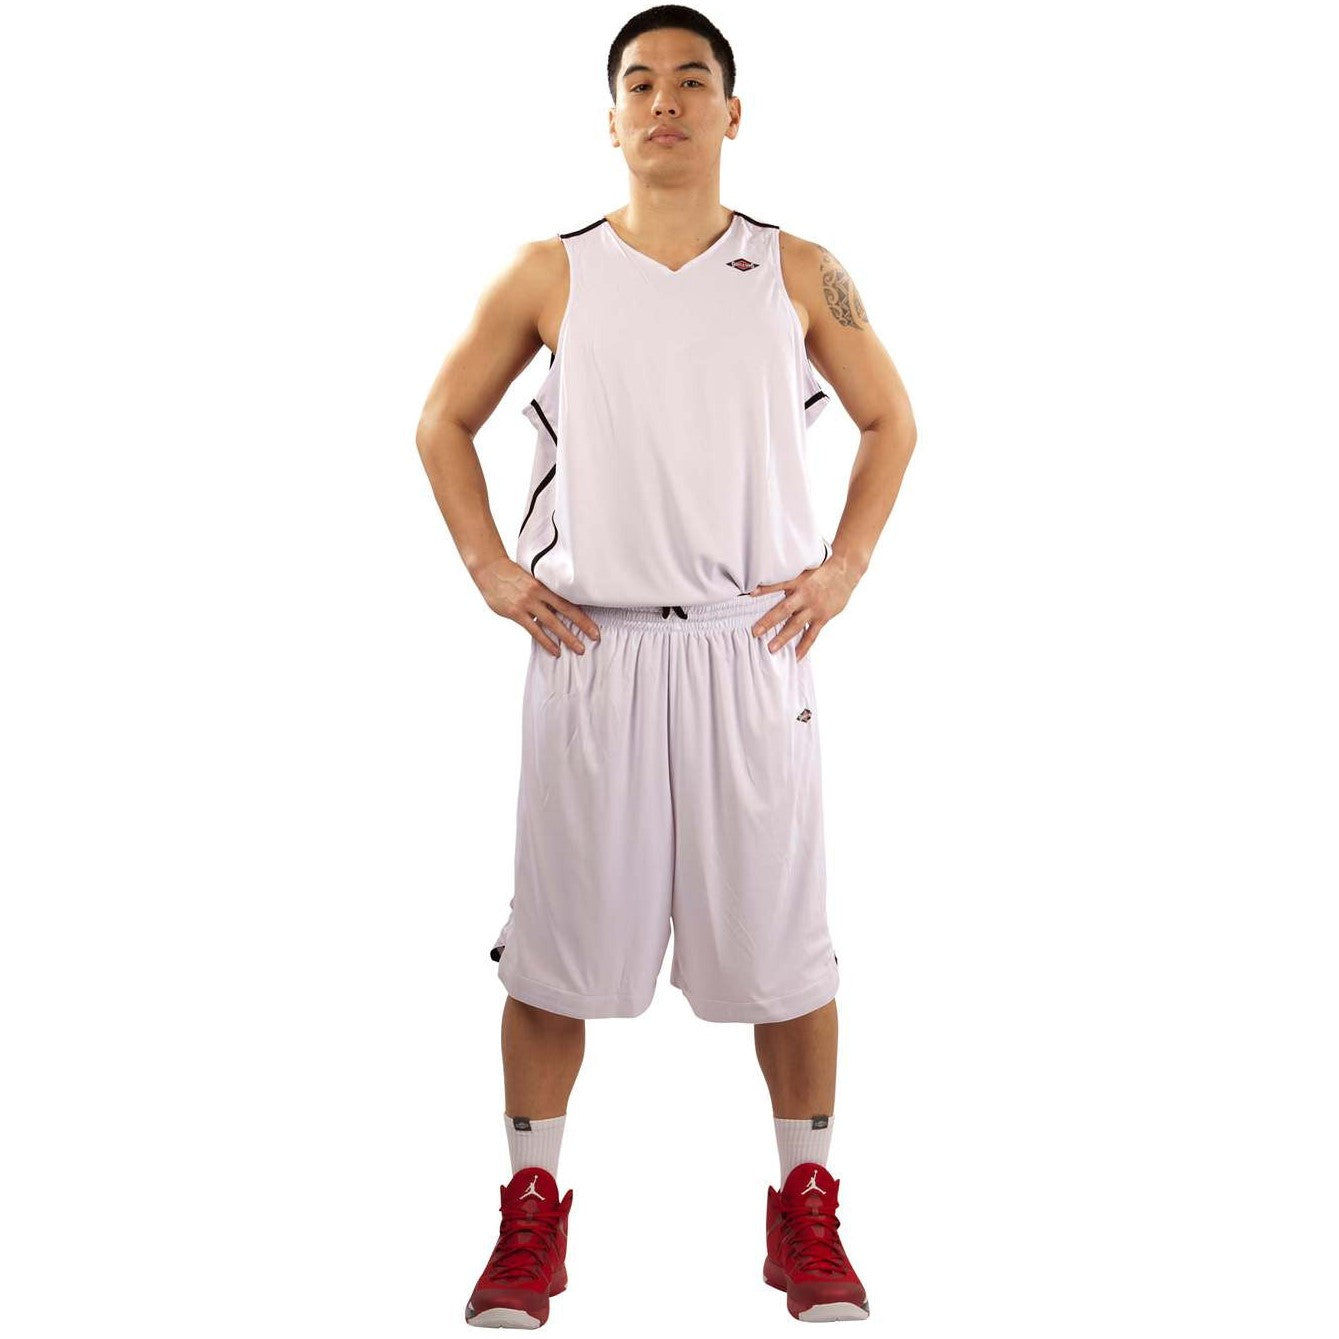 Shirts & Skins Black/White League Reversible Basketball Uniform